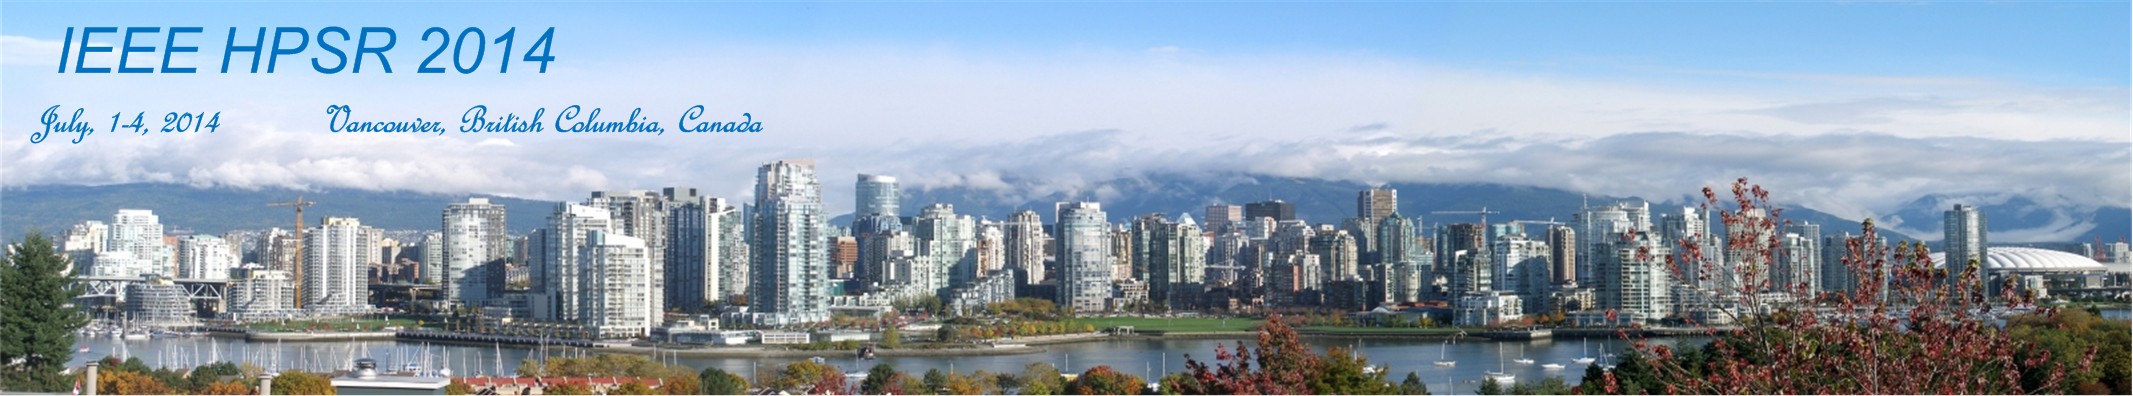 HPSR 2014 Vancouver, Canada